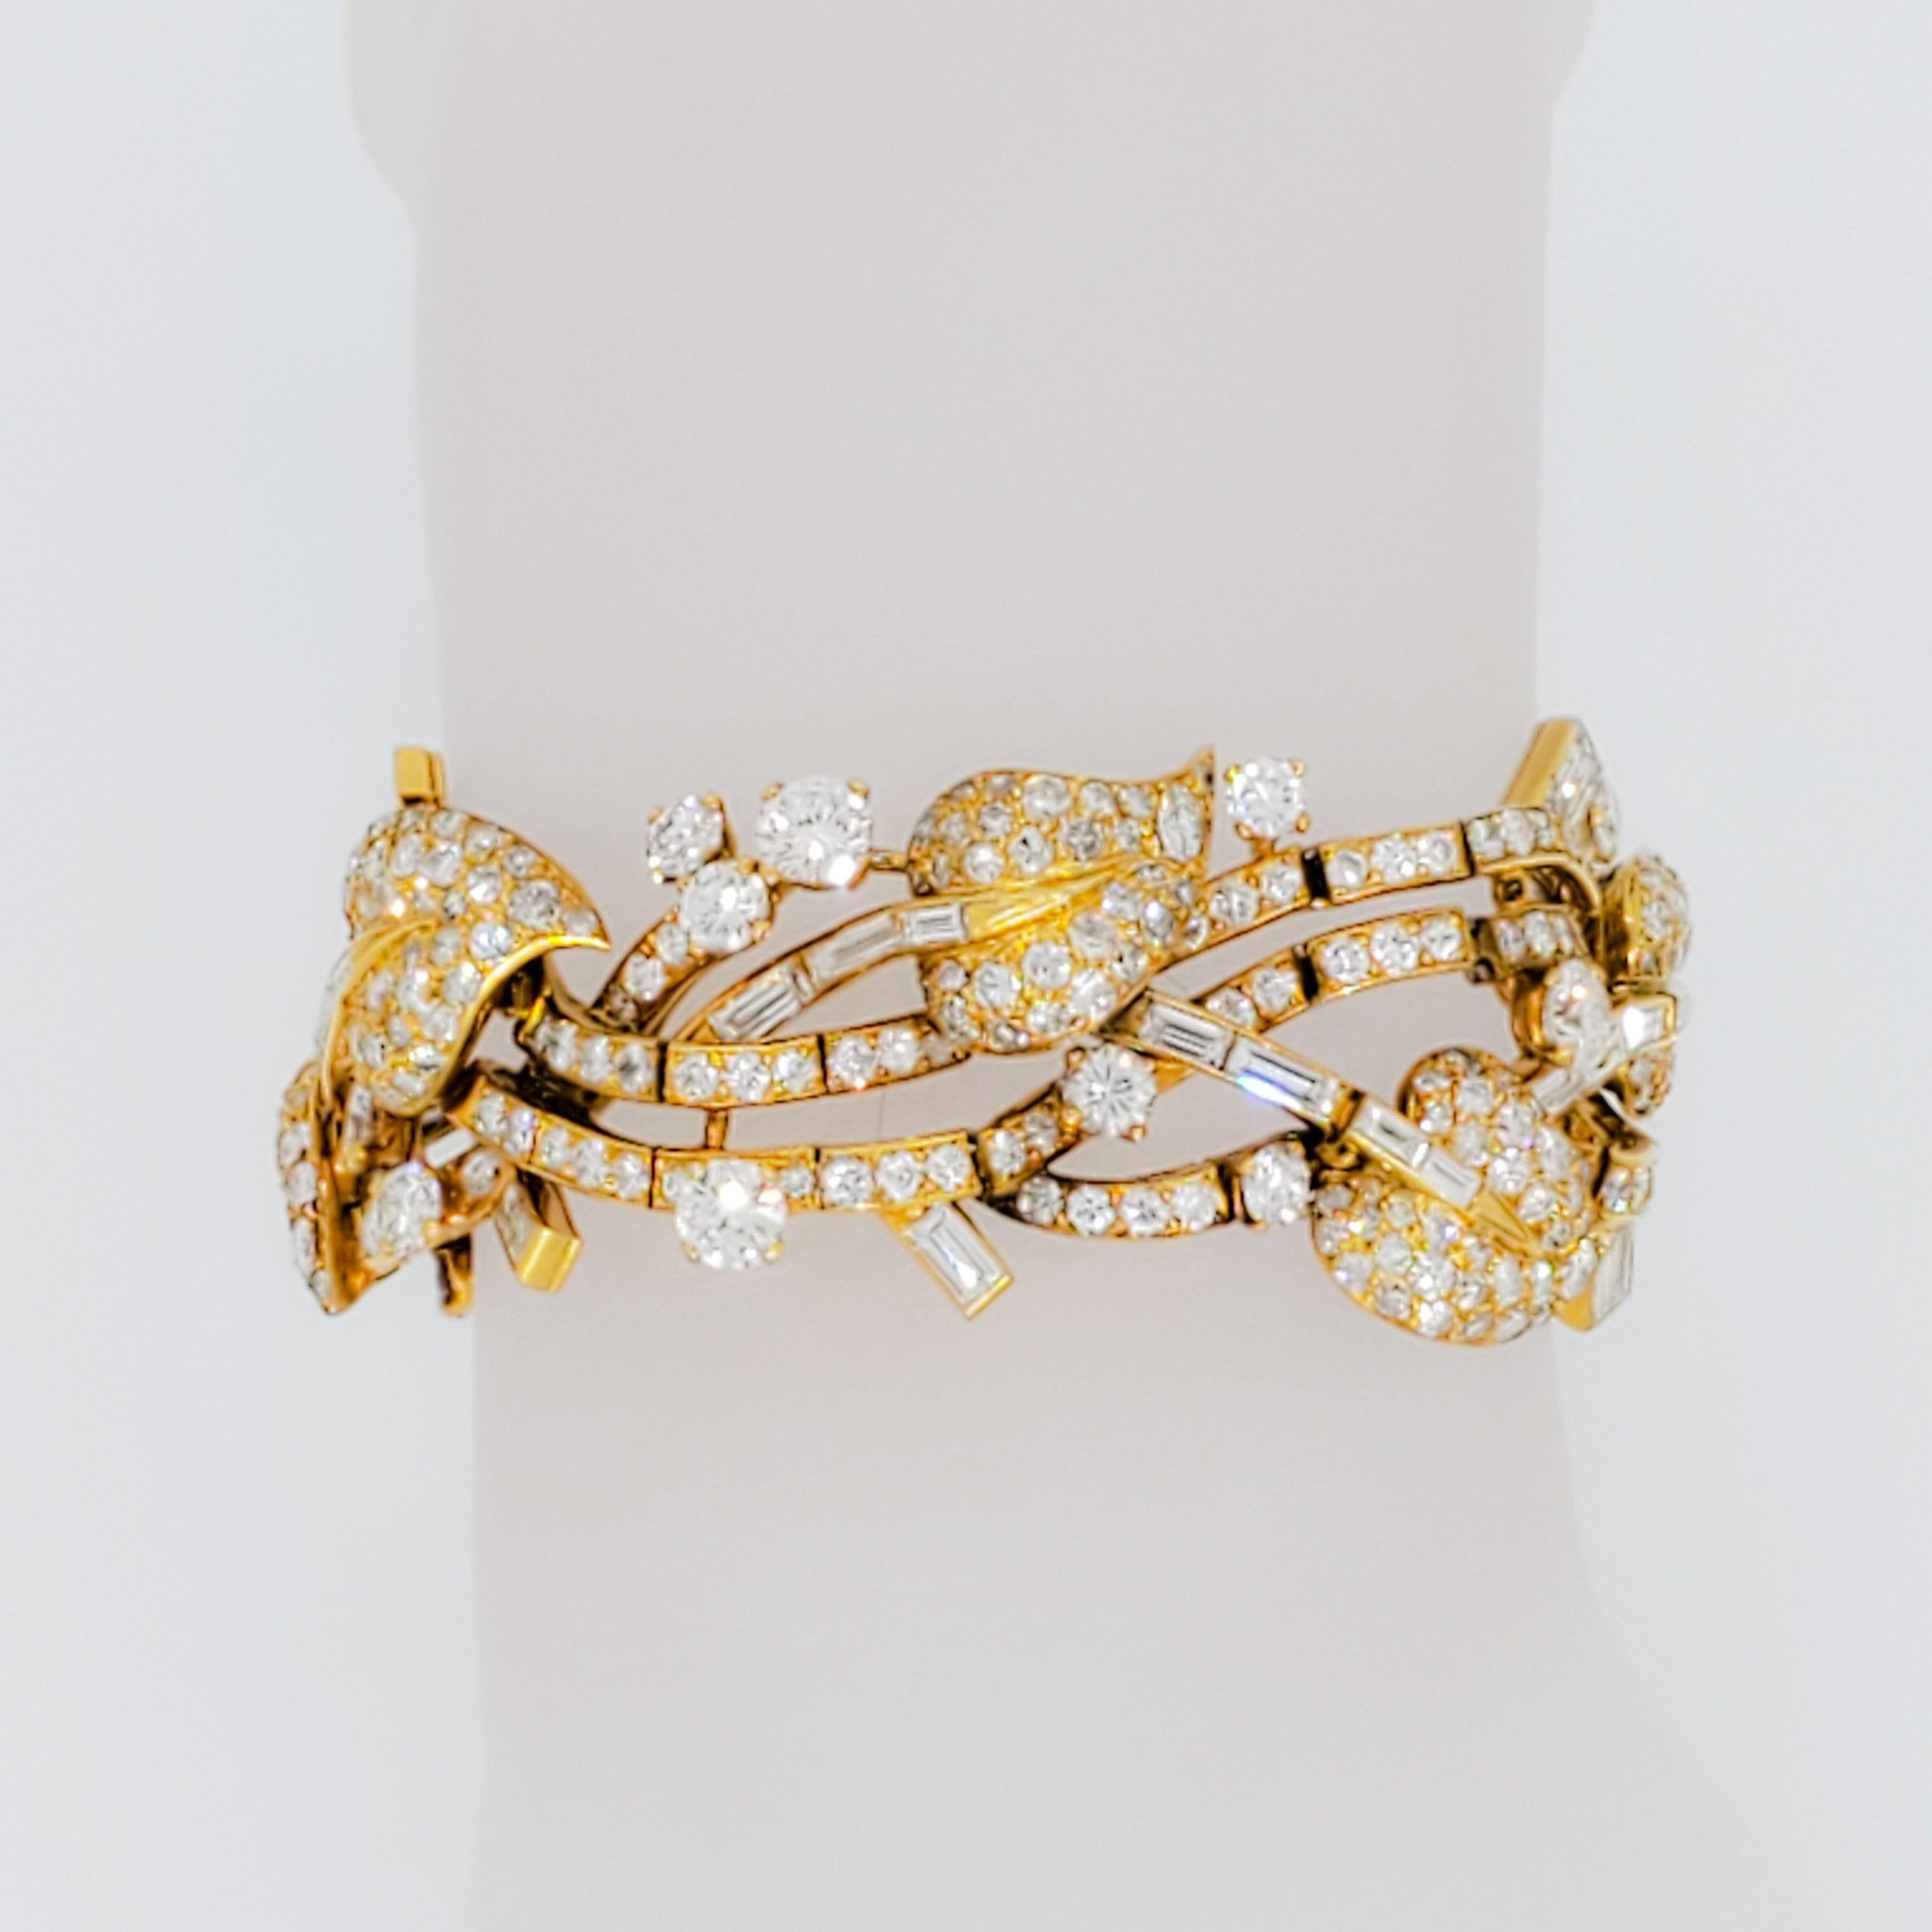 Baguette Cut Estate Diamond and 18k Yellow Gold Cuff Bracelet